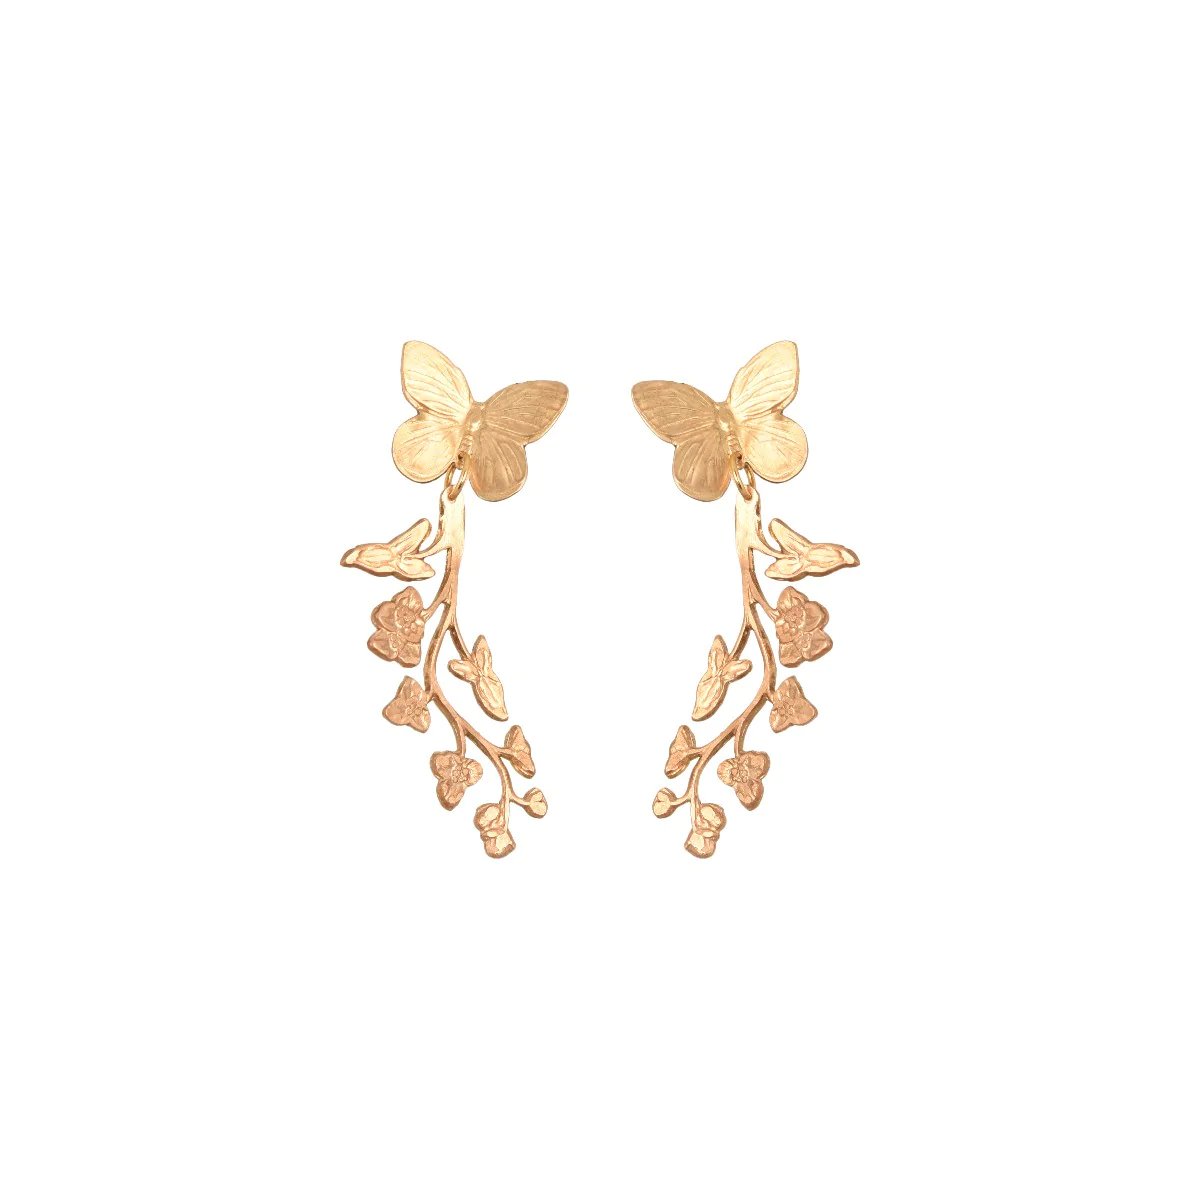 mondocherry - We Dream in Colour jewellery | primavera earrings